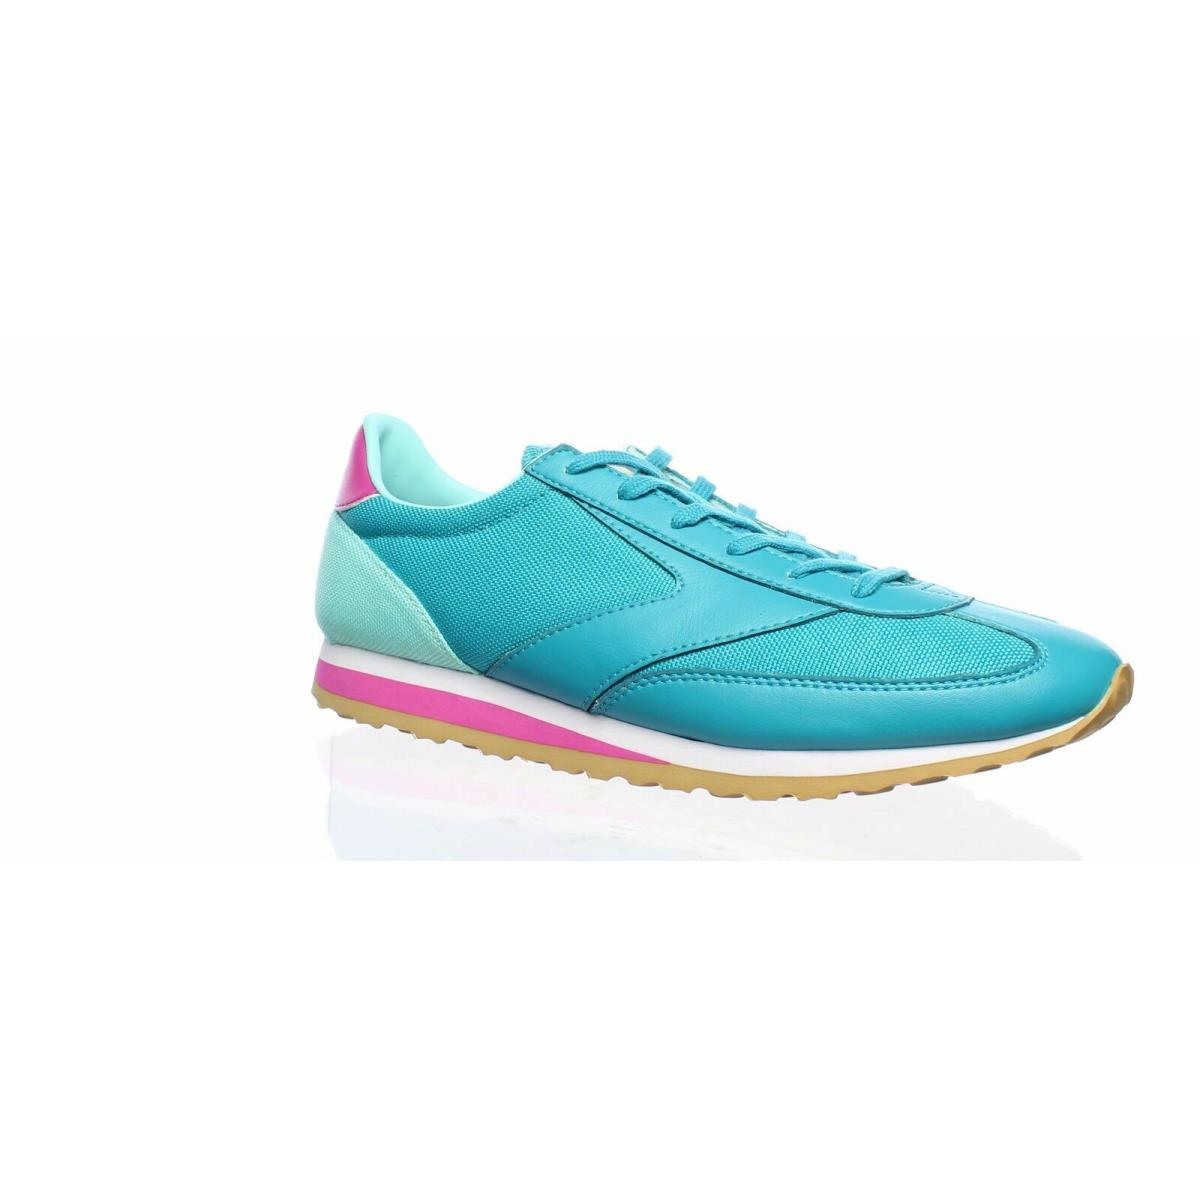 Brooks Womens Vanguard Capri Breeze Running Shoes Size 8.5